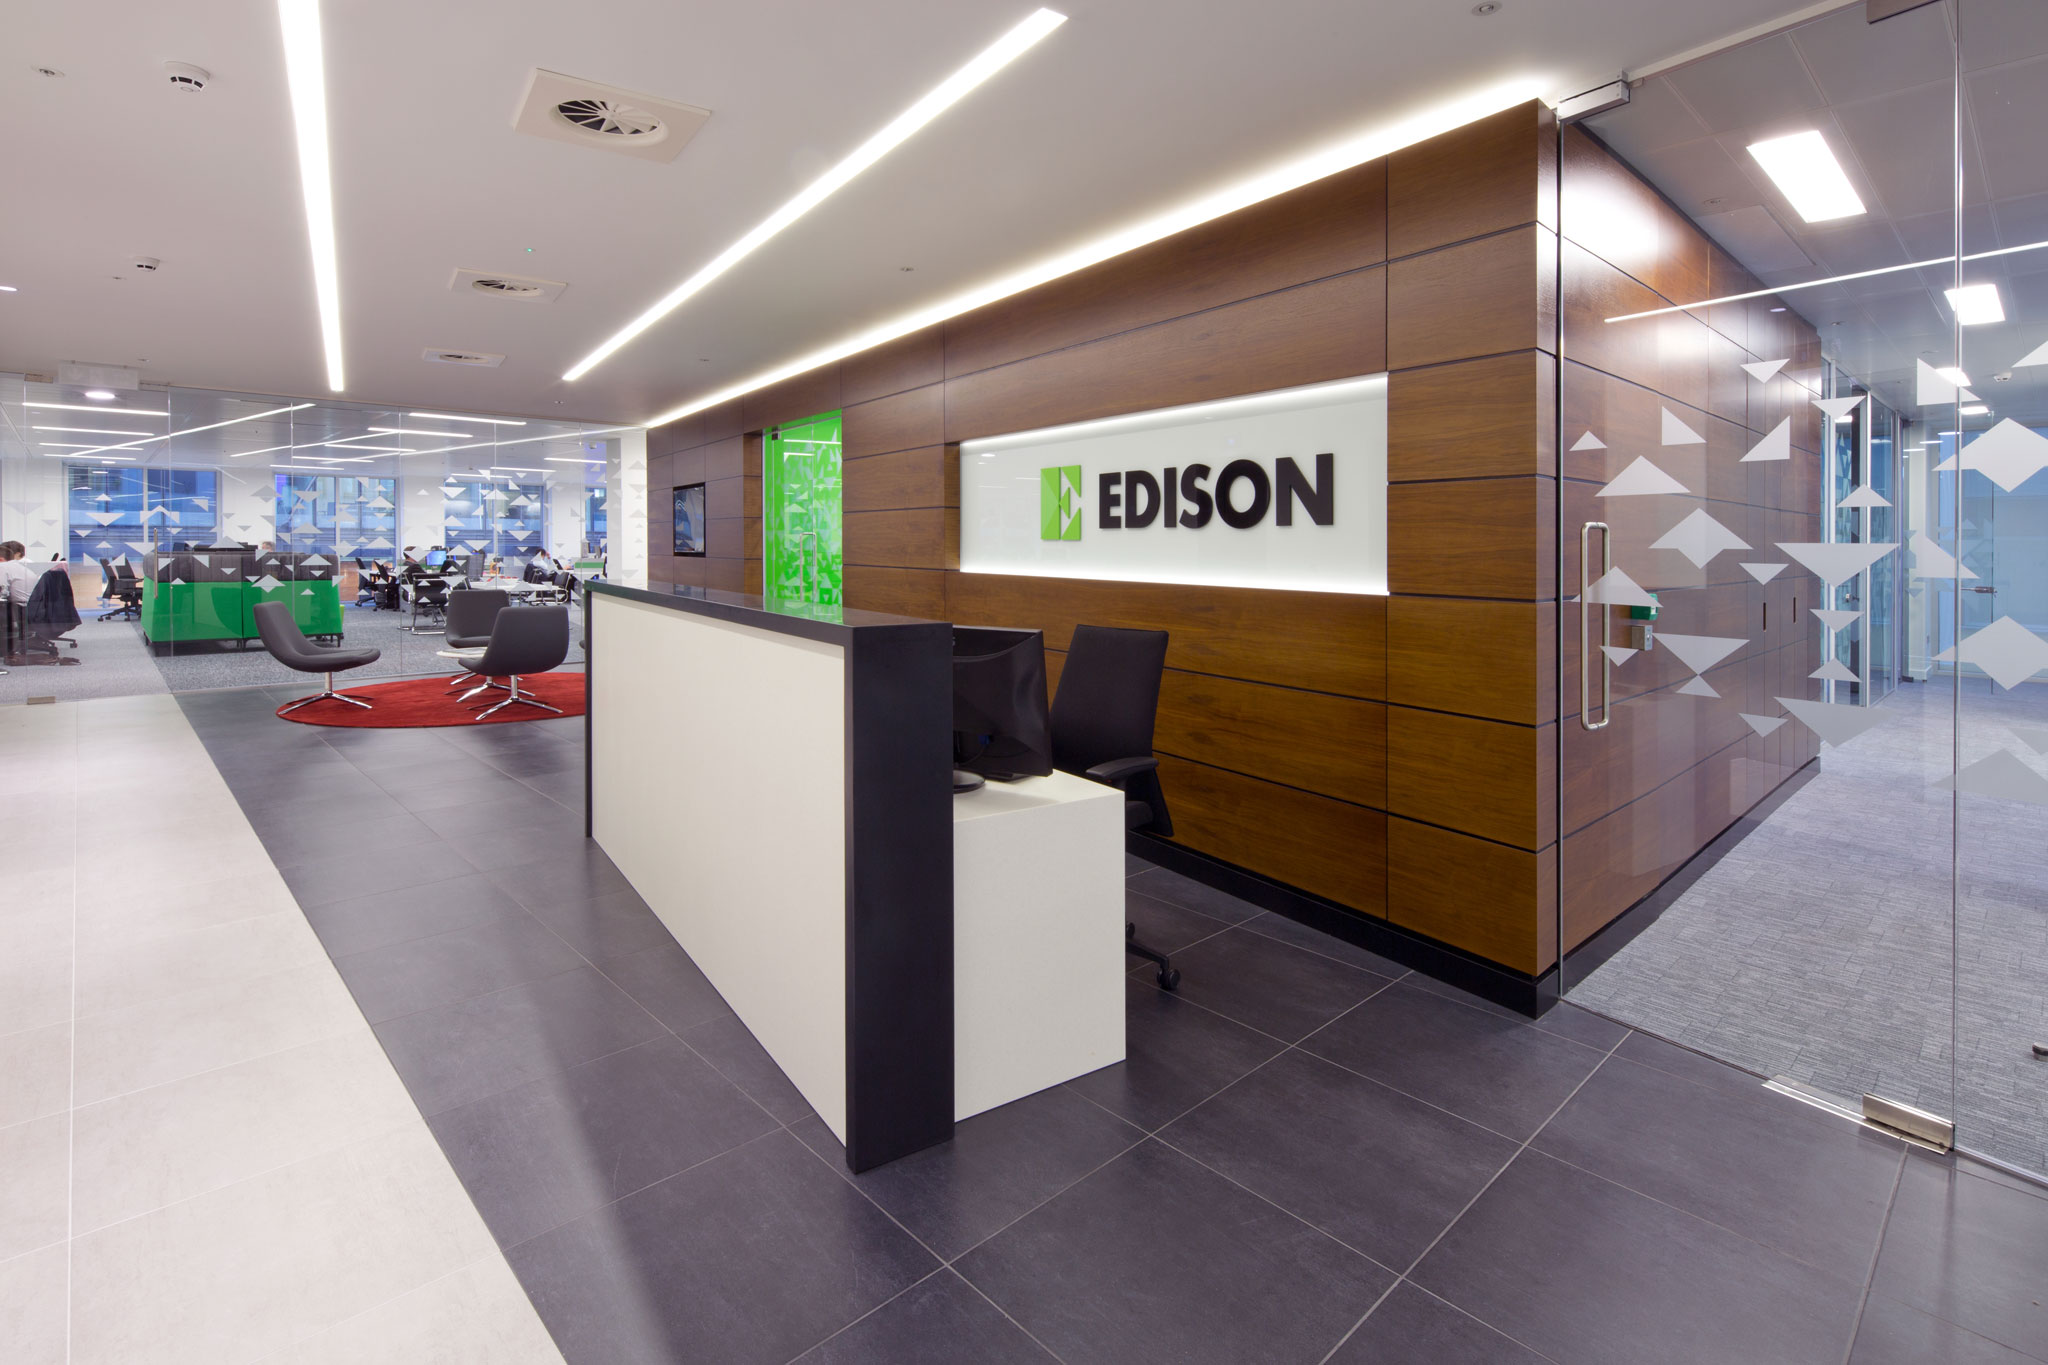 Edison_reception.jpg